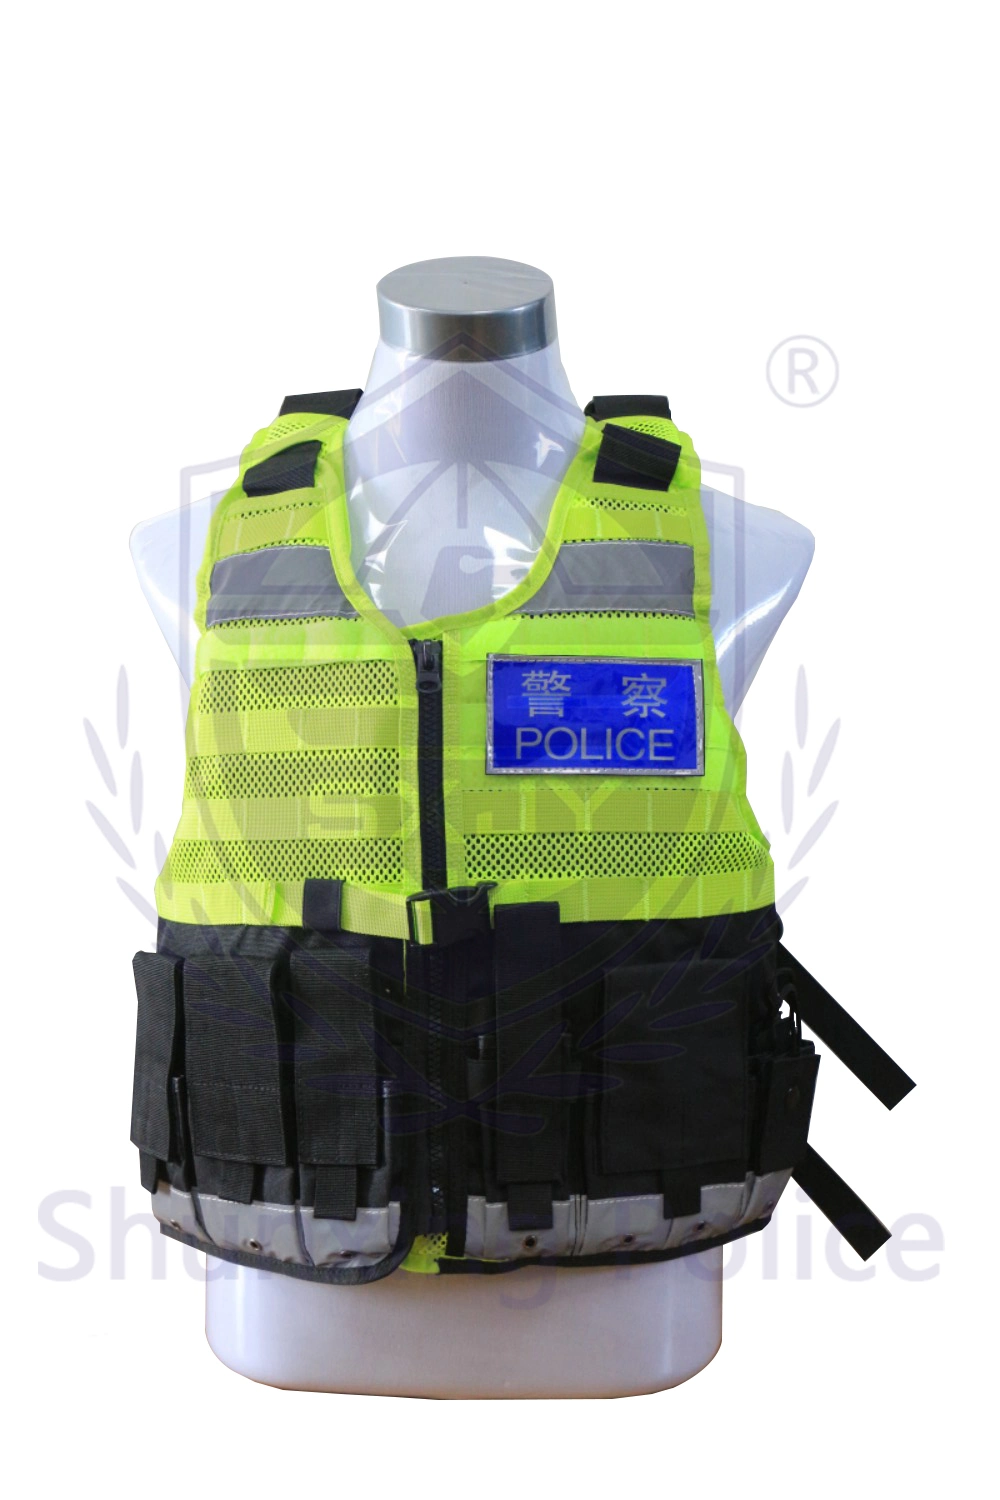 Tactical Vest Reflective Vesttactical Traffic Safety Jacket Reflective Tank Top